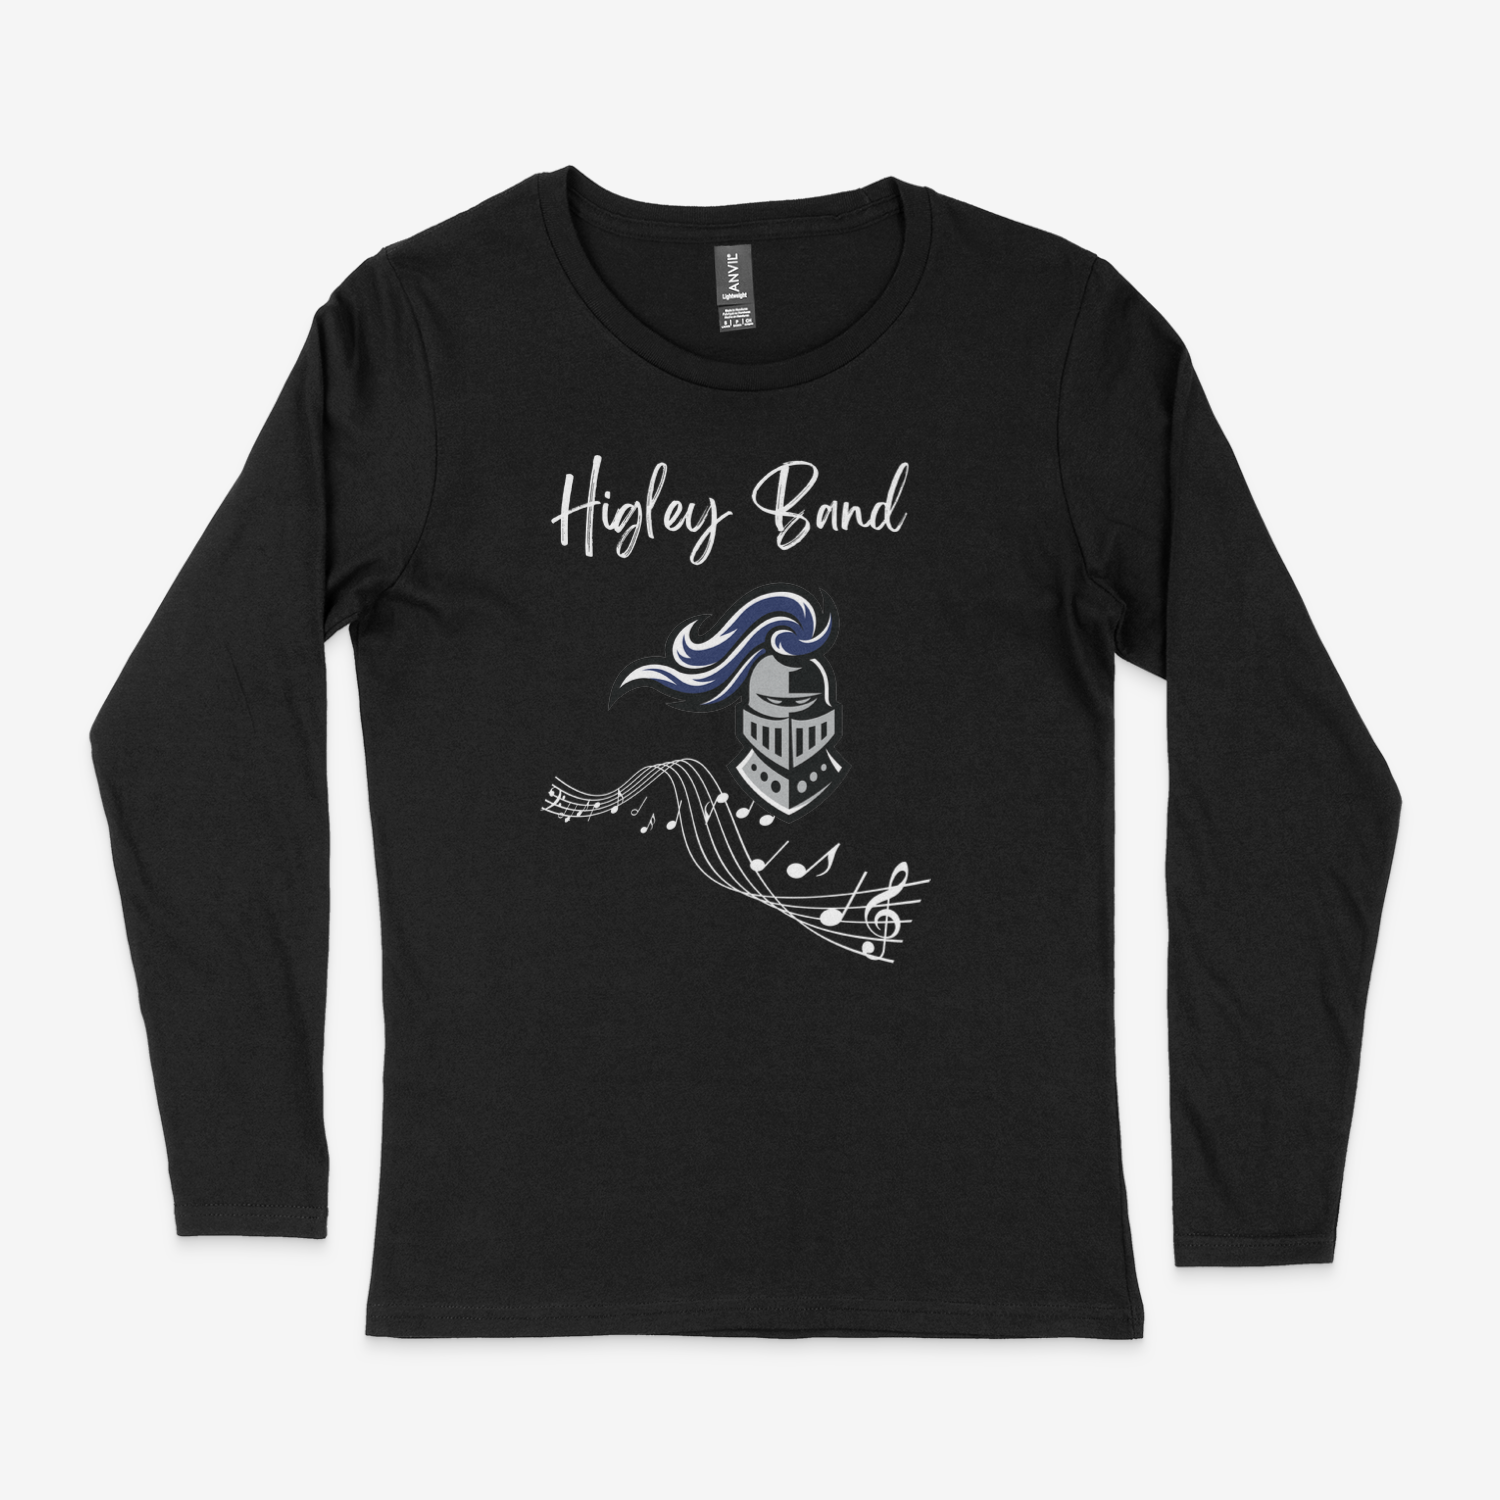 Higley Band Long Sleeve T-Shirt - Student